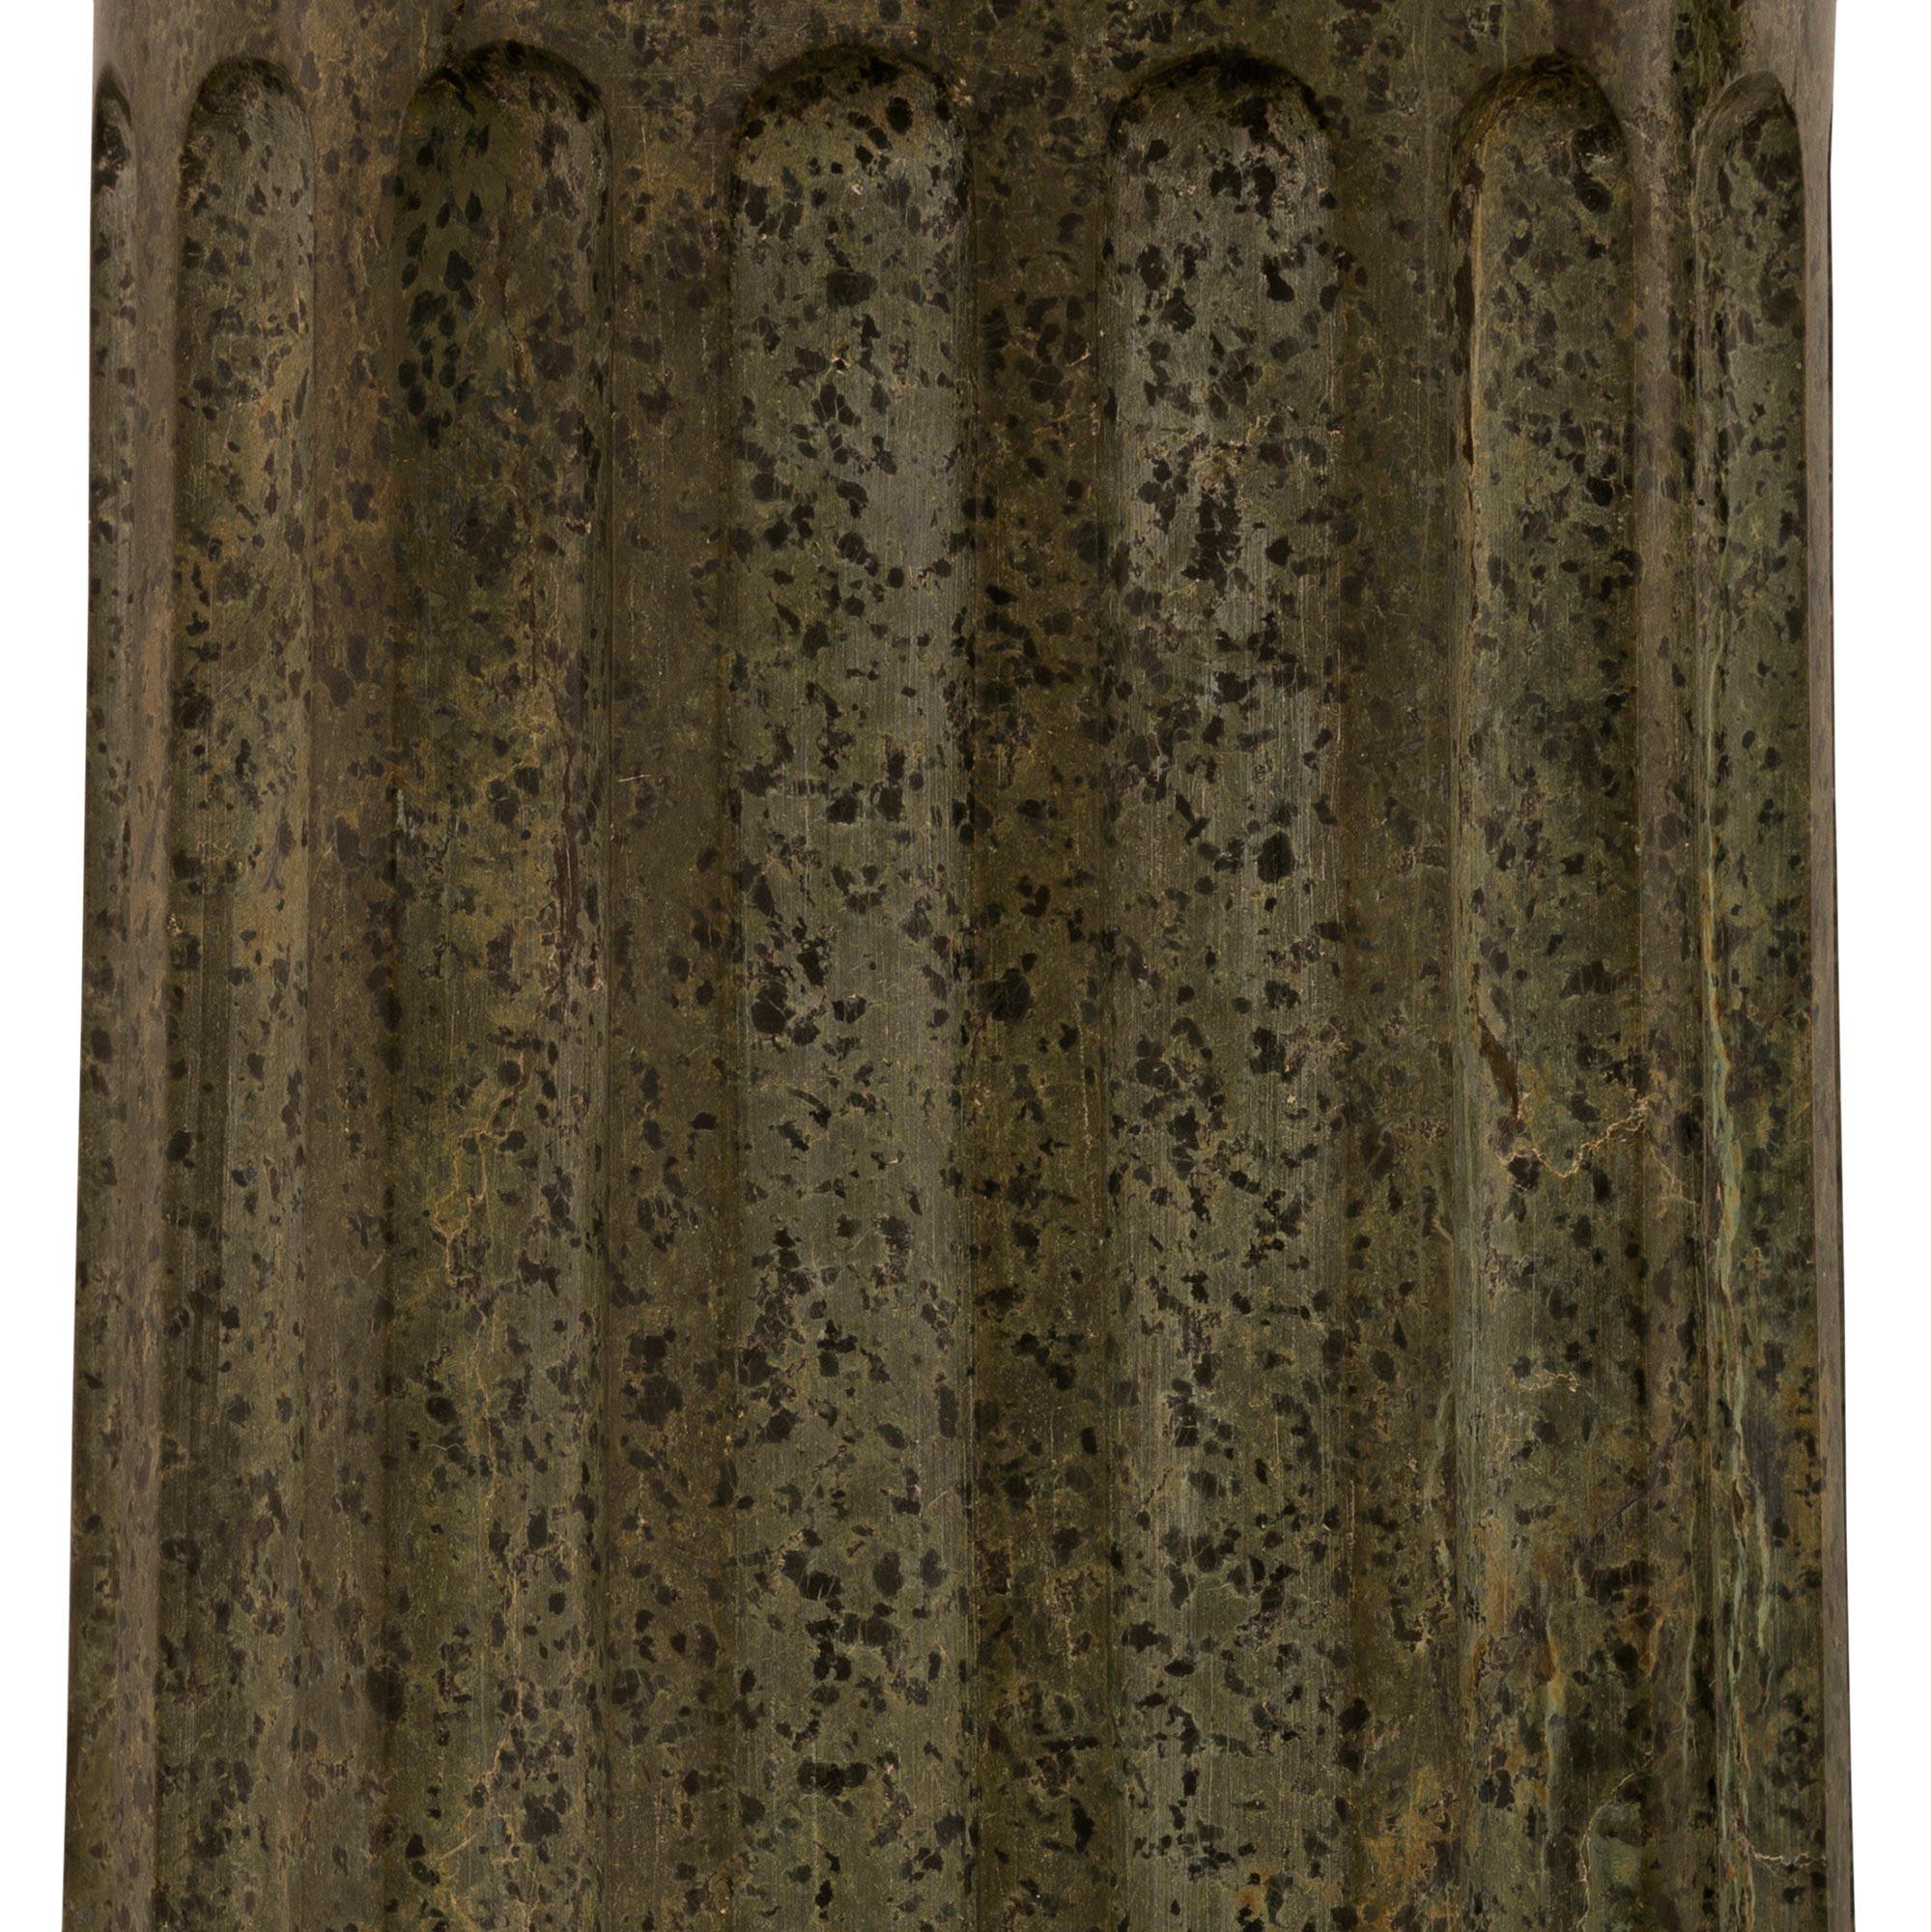 Großer italienischer Vert de Patricia-Marmorsockel aus dem 19. Jahrhundert im Angebot 2